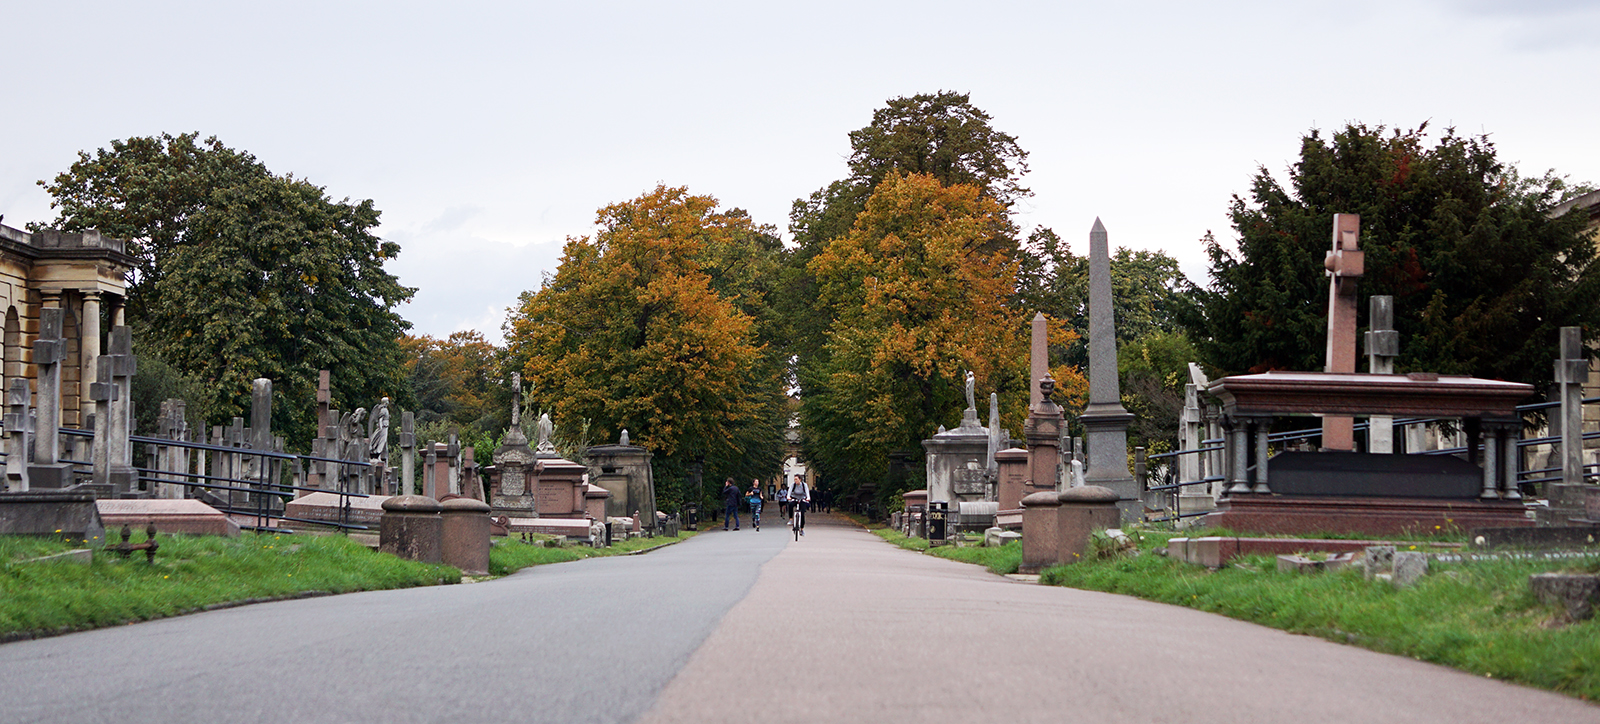 2016-10-15-Brompton-Cemetery_Landscape_Autumn_Kensington-and-Chelsea-View-towards-Fulham-Road